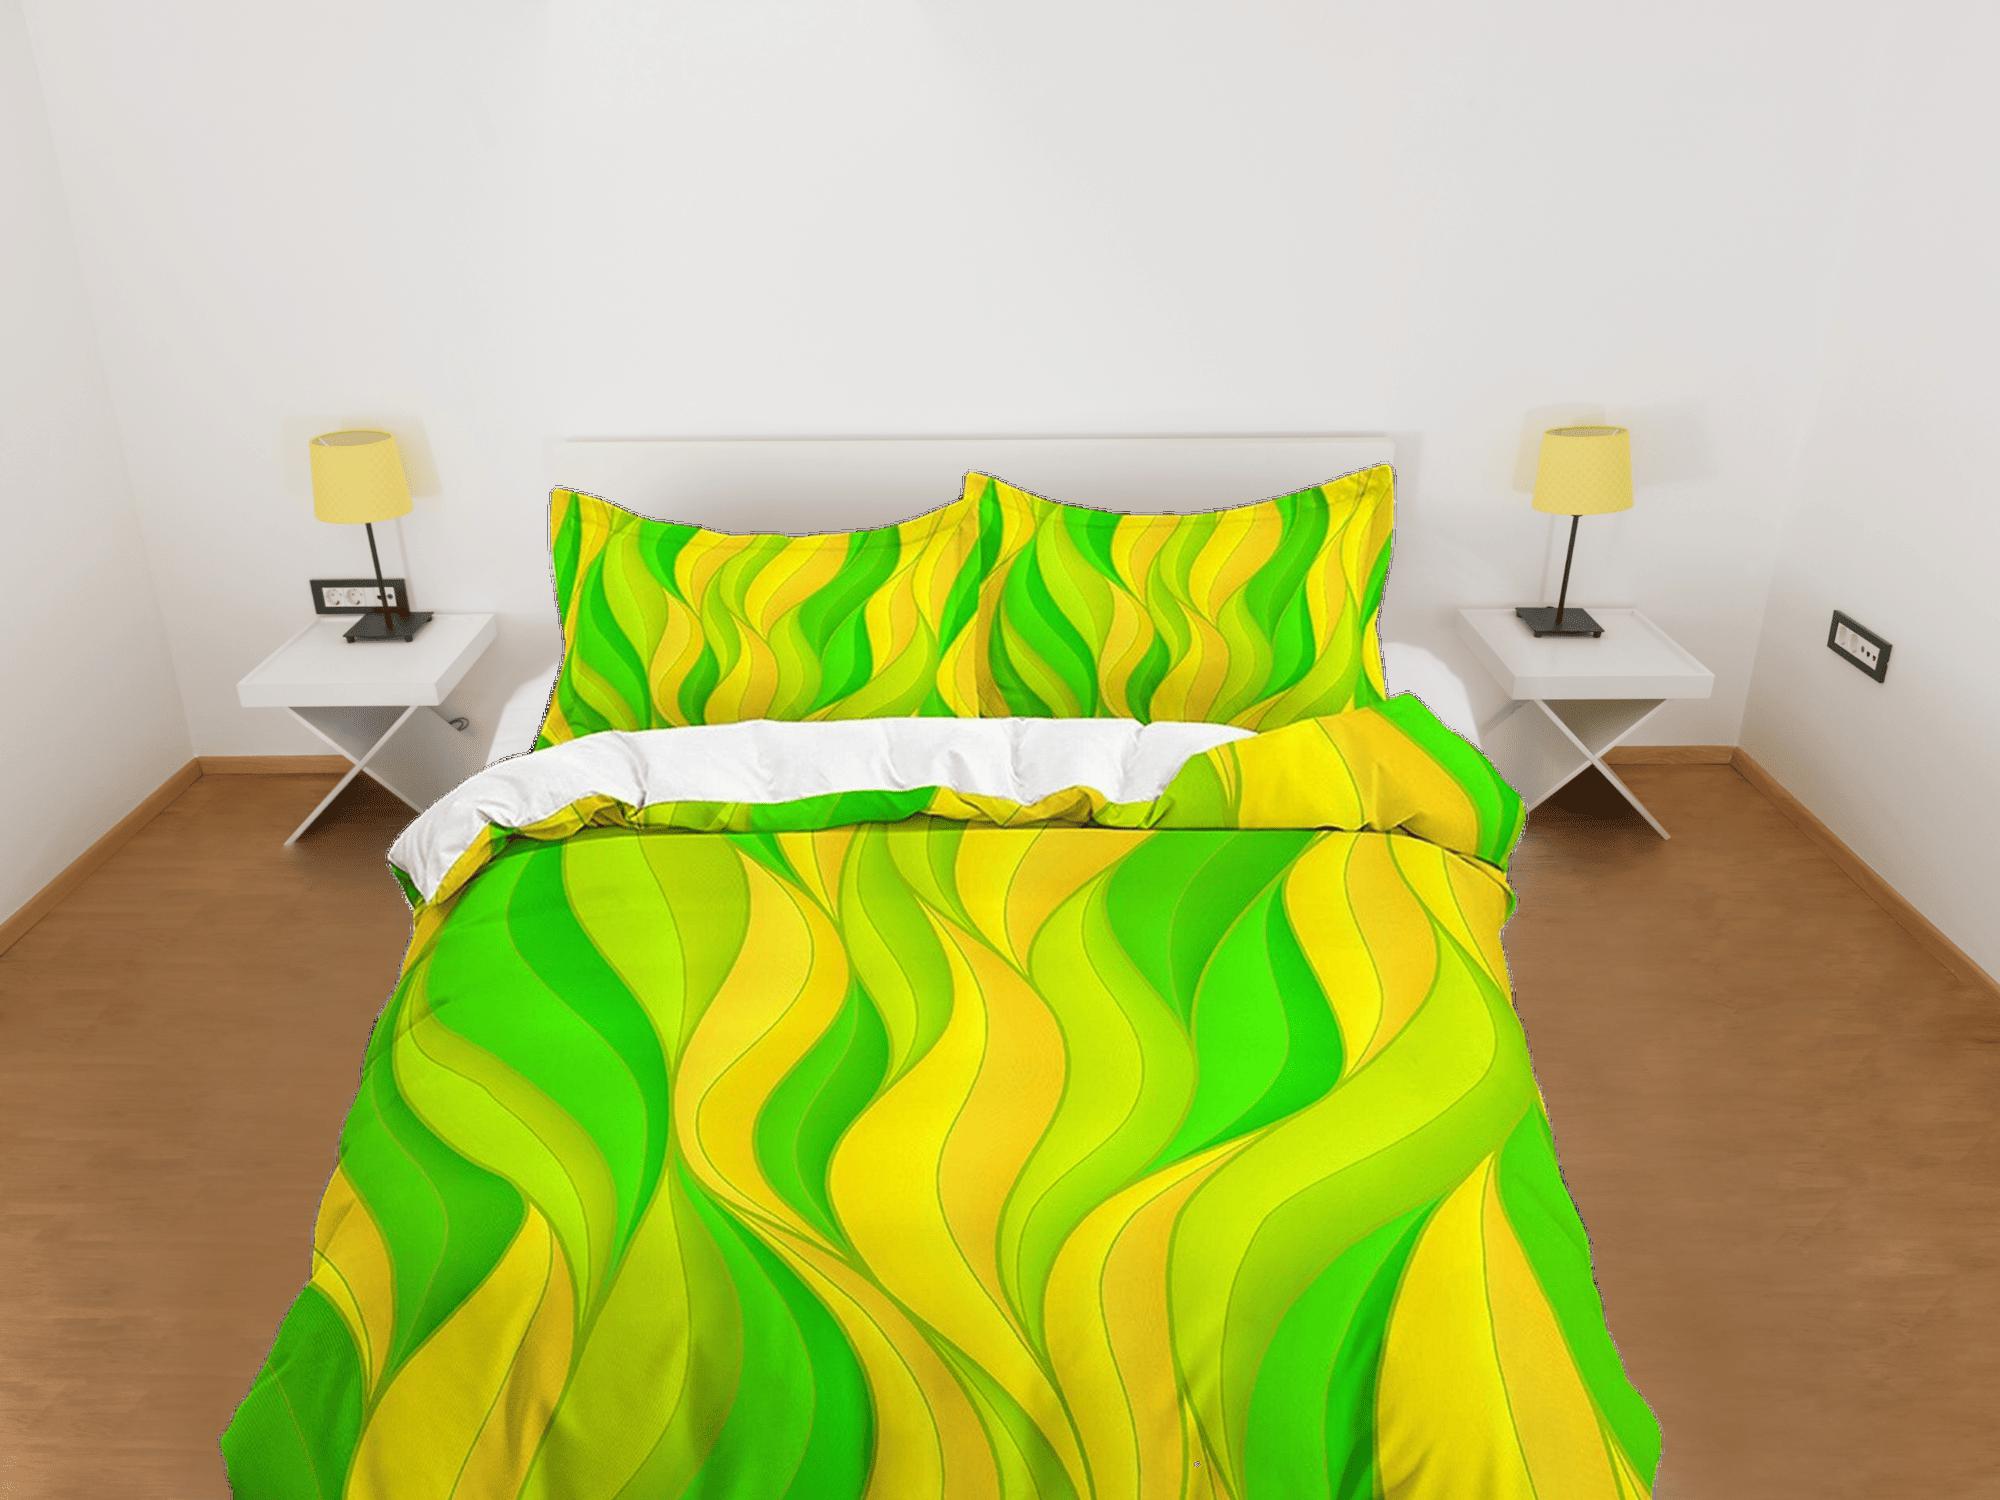 daintyduvet Mid century modern bedroom art set yellow green duvet cover, aesthetic room decor boho chic bedding set full, colorful maximalist retro